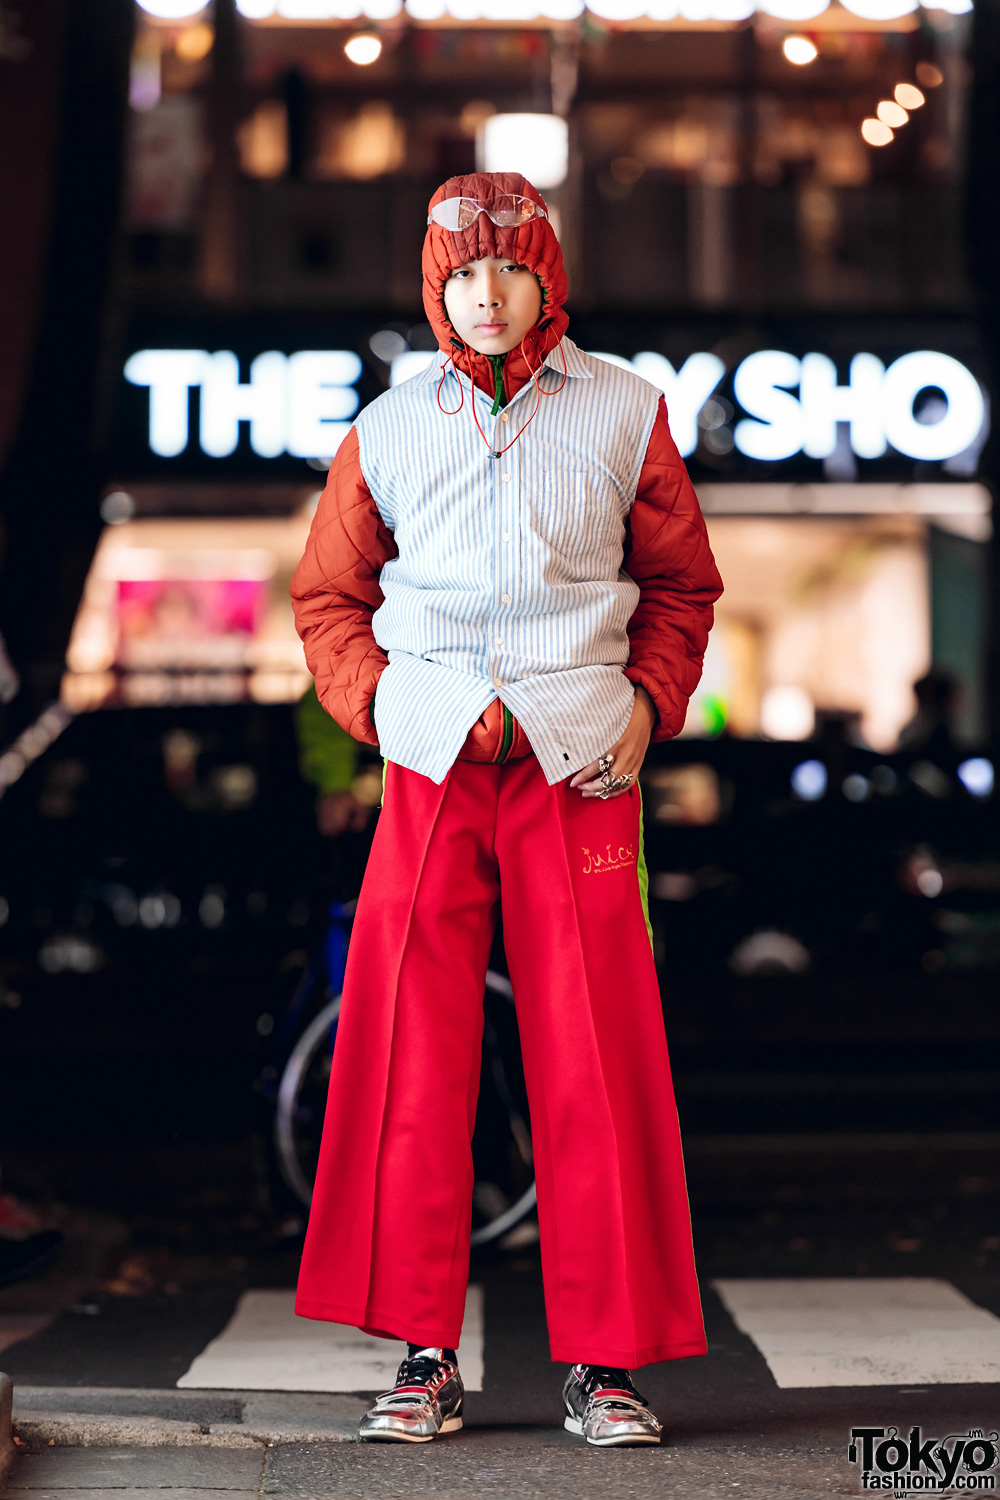 Hooded Japanese Fashion Student in Harajuku w/ Remake Sleeveless Shirt, Track Pants & Silver Shoes